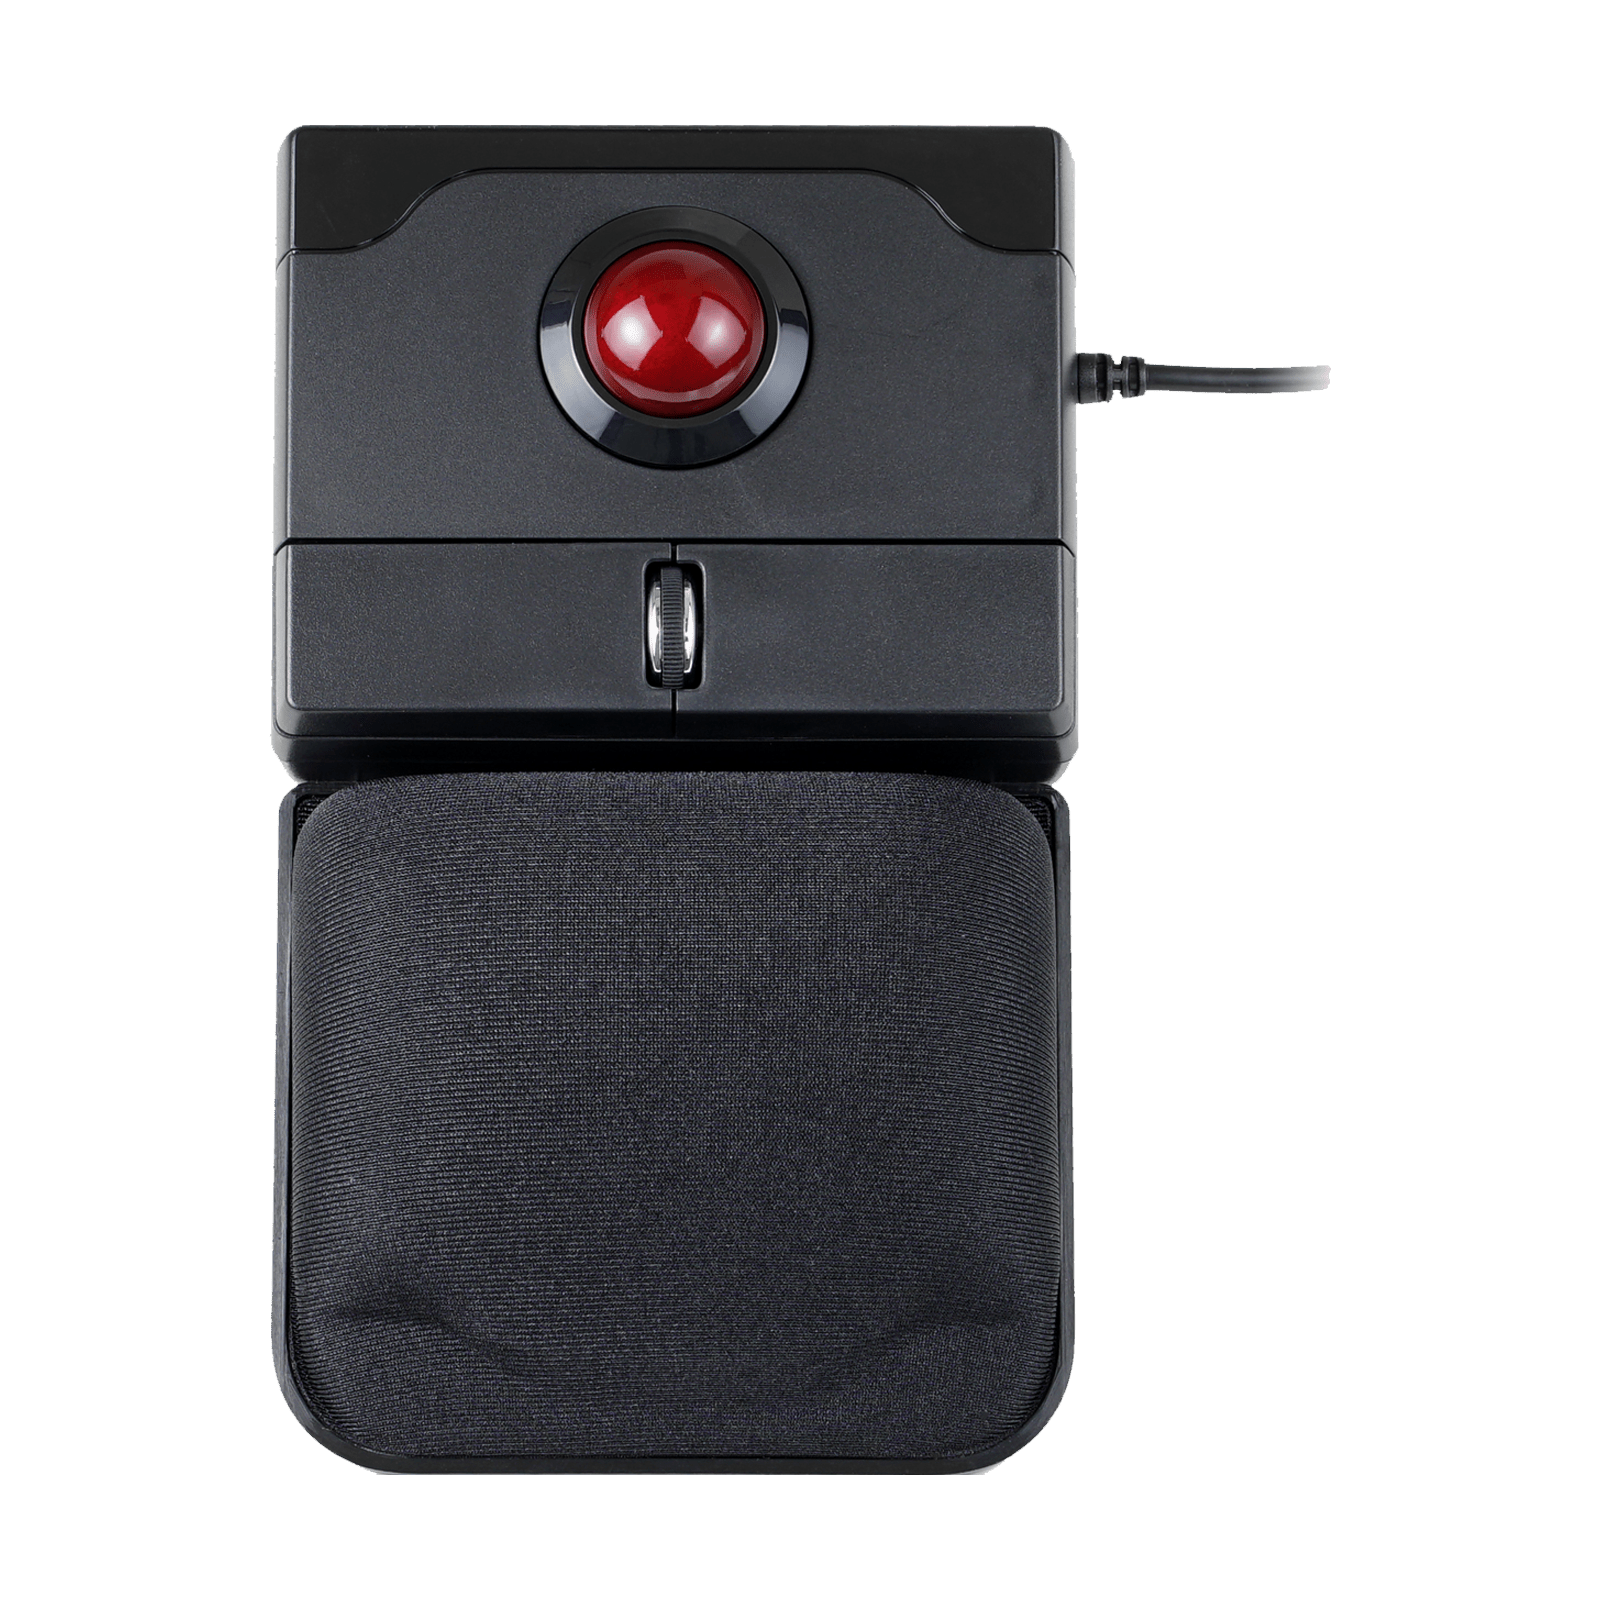 PERIPRO-506 - Wired Trackball Mouse plus Detachable Wrist Rest Pad 400 DPI - Perixx Europe